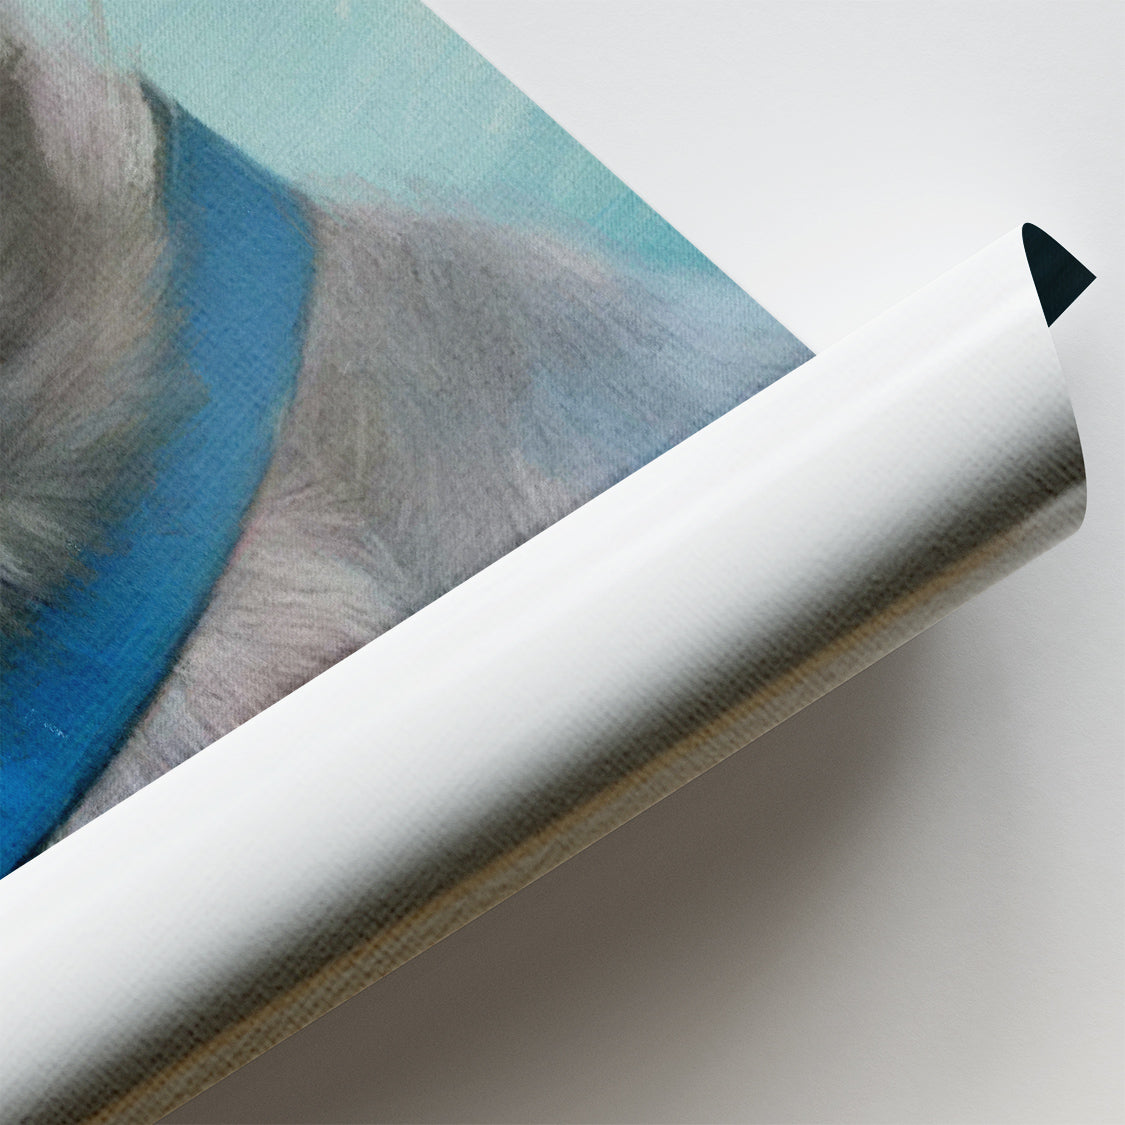 Traditional Blue Hue  - Custom Pet Portrait Art Print